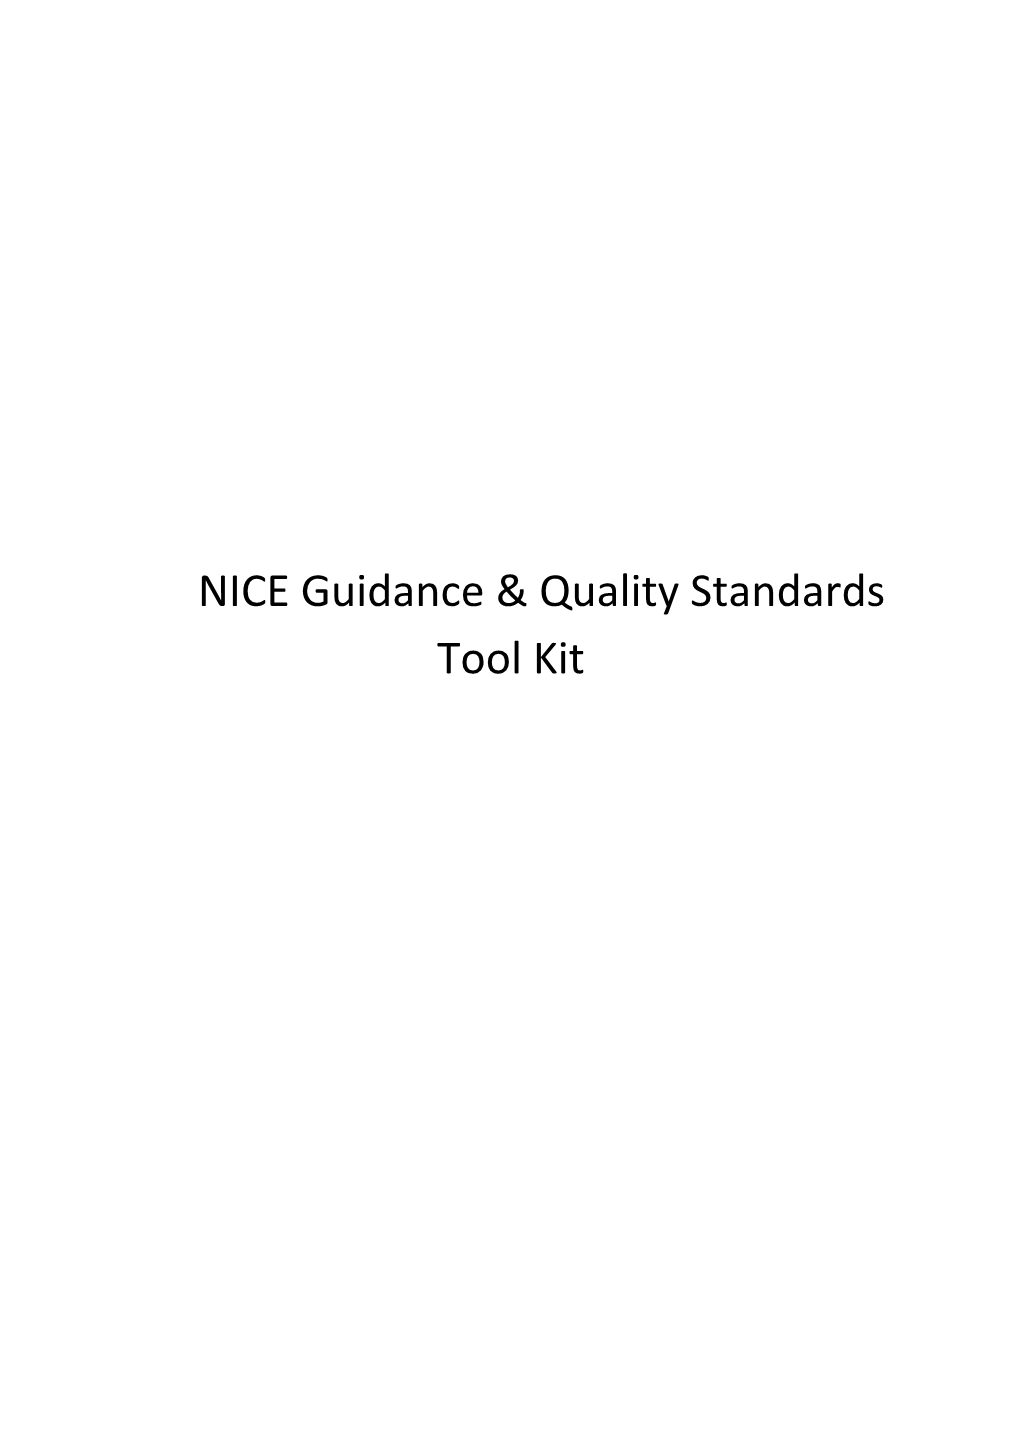 NICE Guidance & Quality Standards Tool Kit